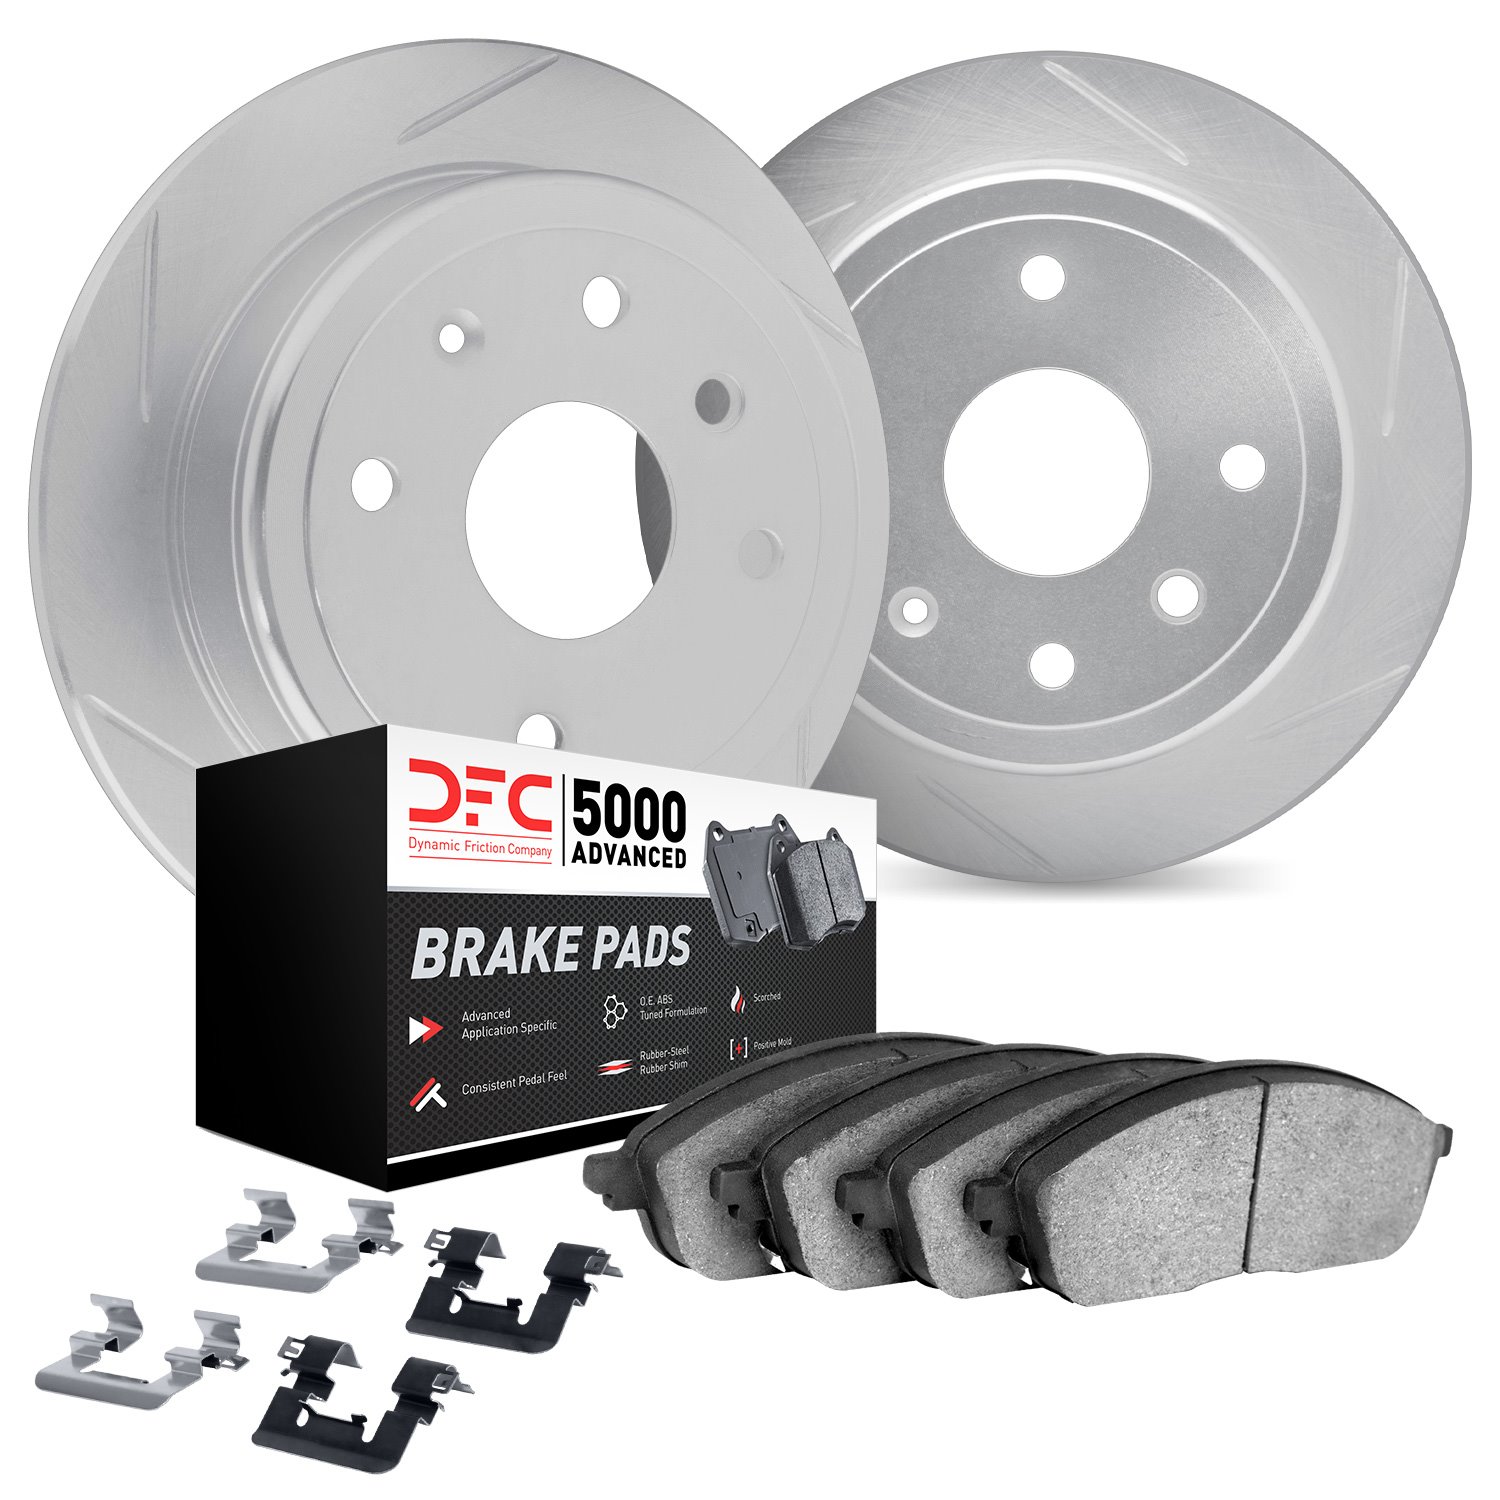 5512-54220 Slotted Brake Rotors w/5000 Advanced Brake Pads Kit & Hardware [Silver], 2013-2020 Ford/Lincoln/Mercury/Mazda, Positi